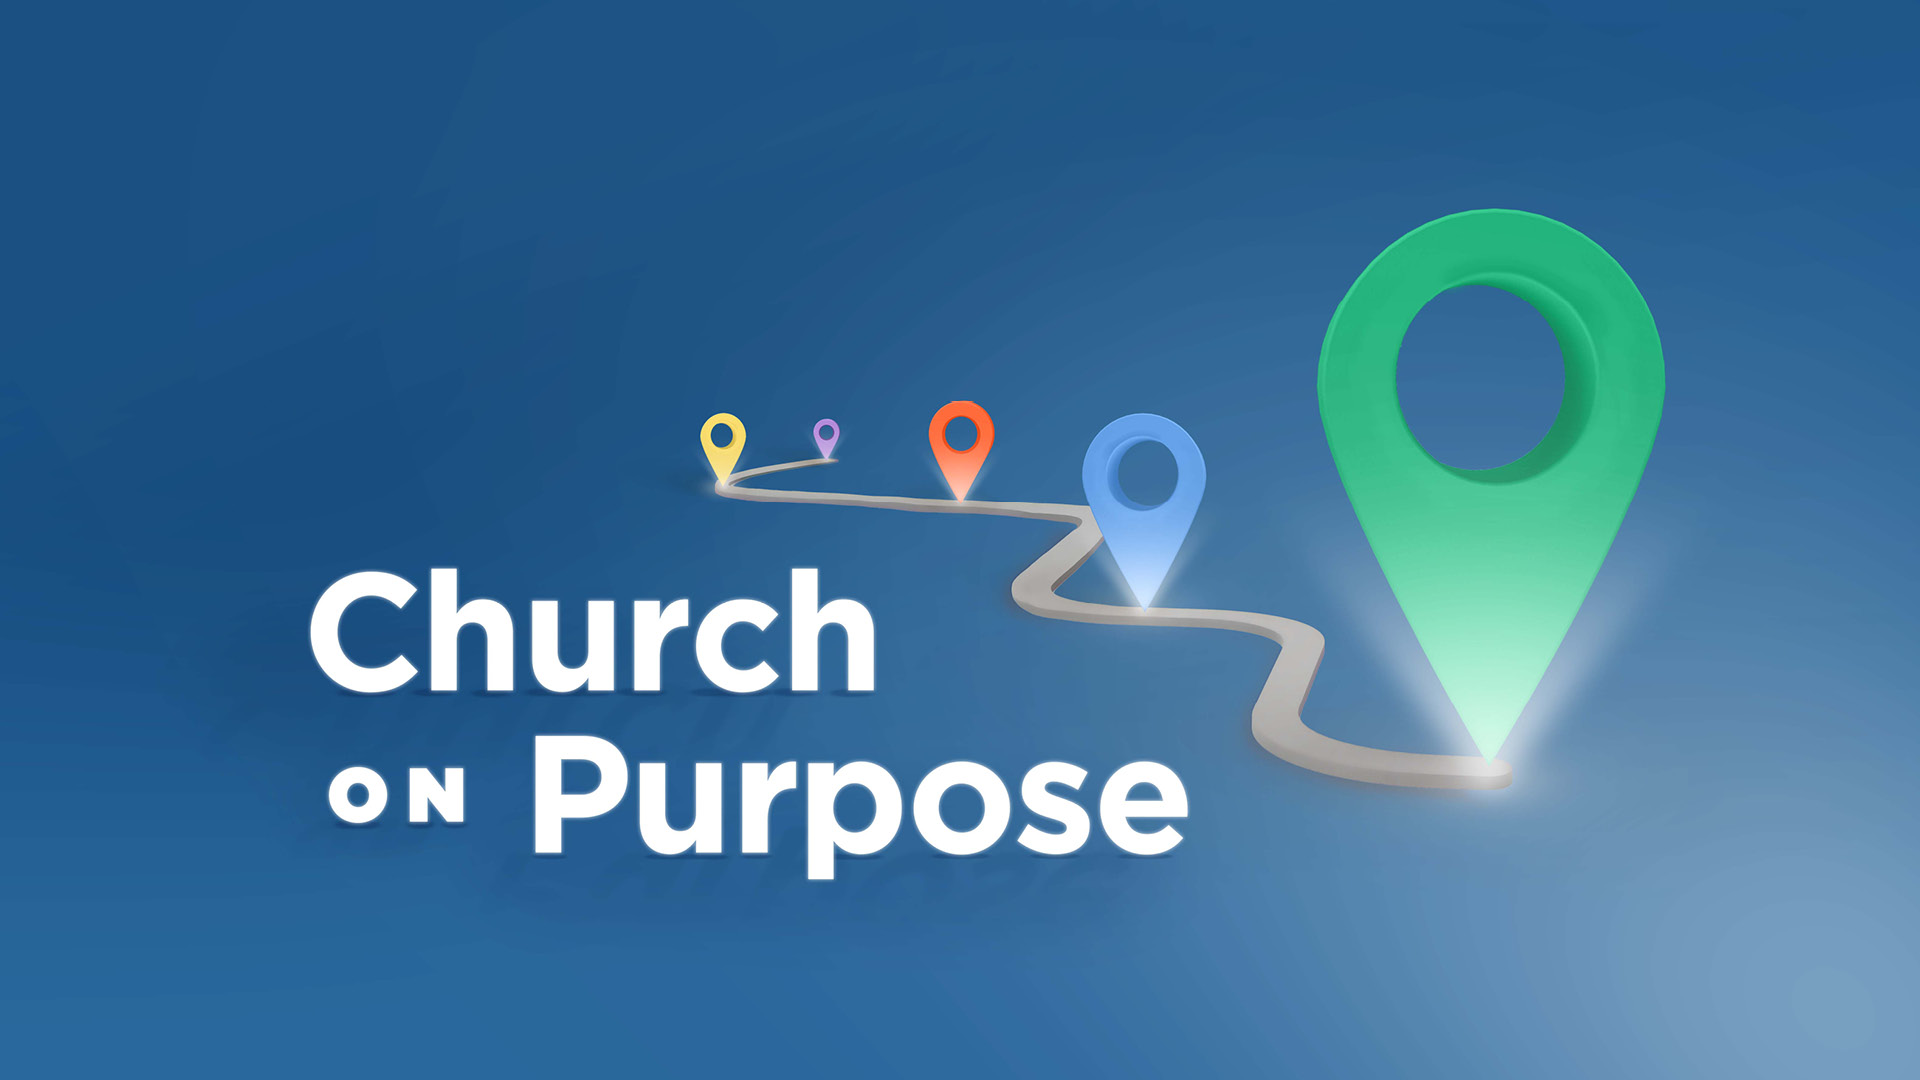 Church On Purpose: People Need Jesus